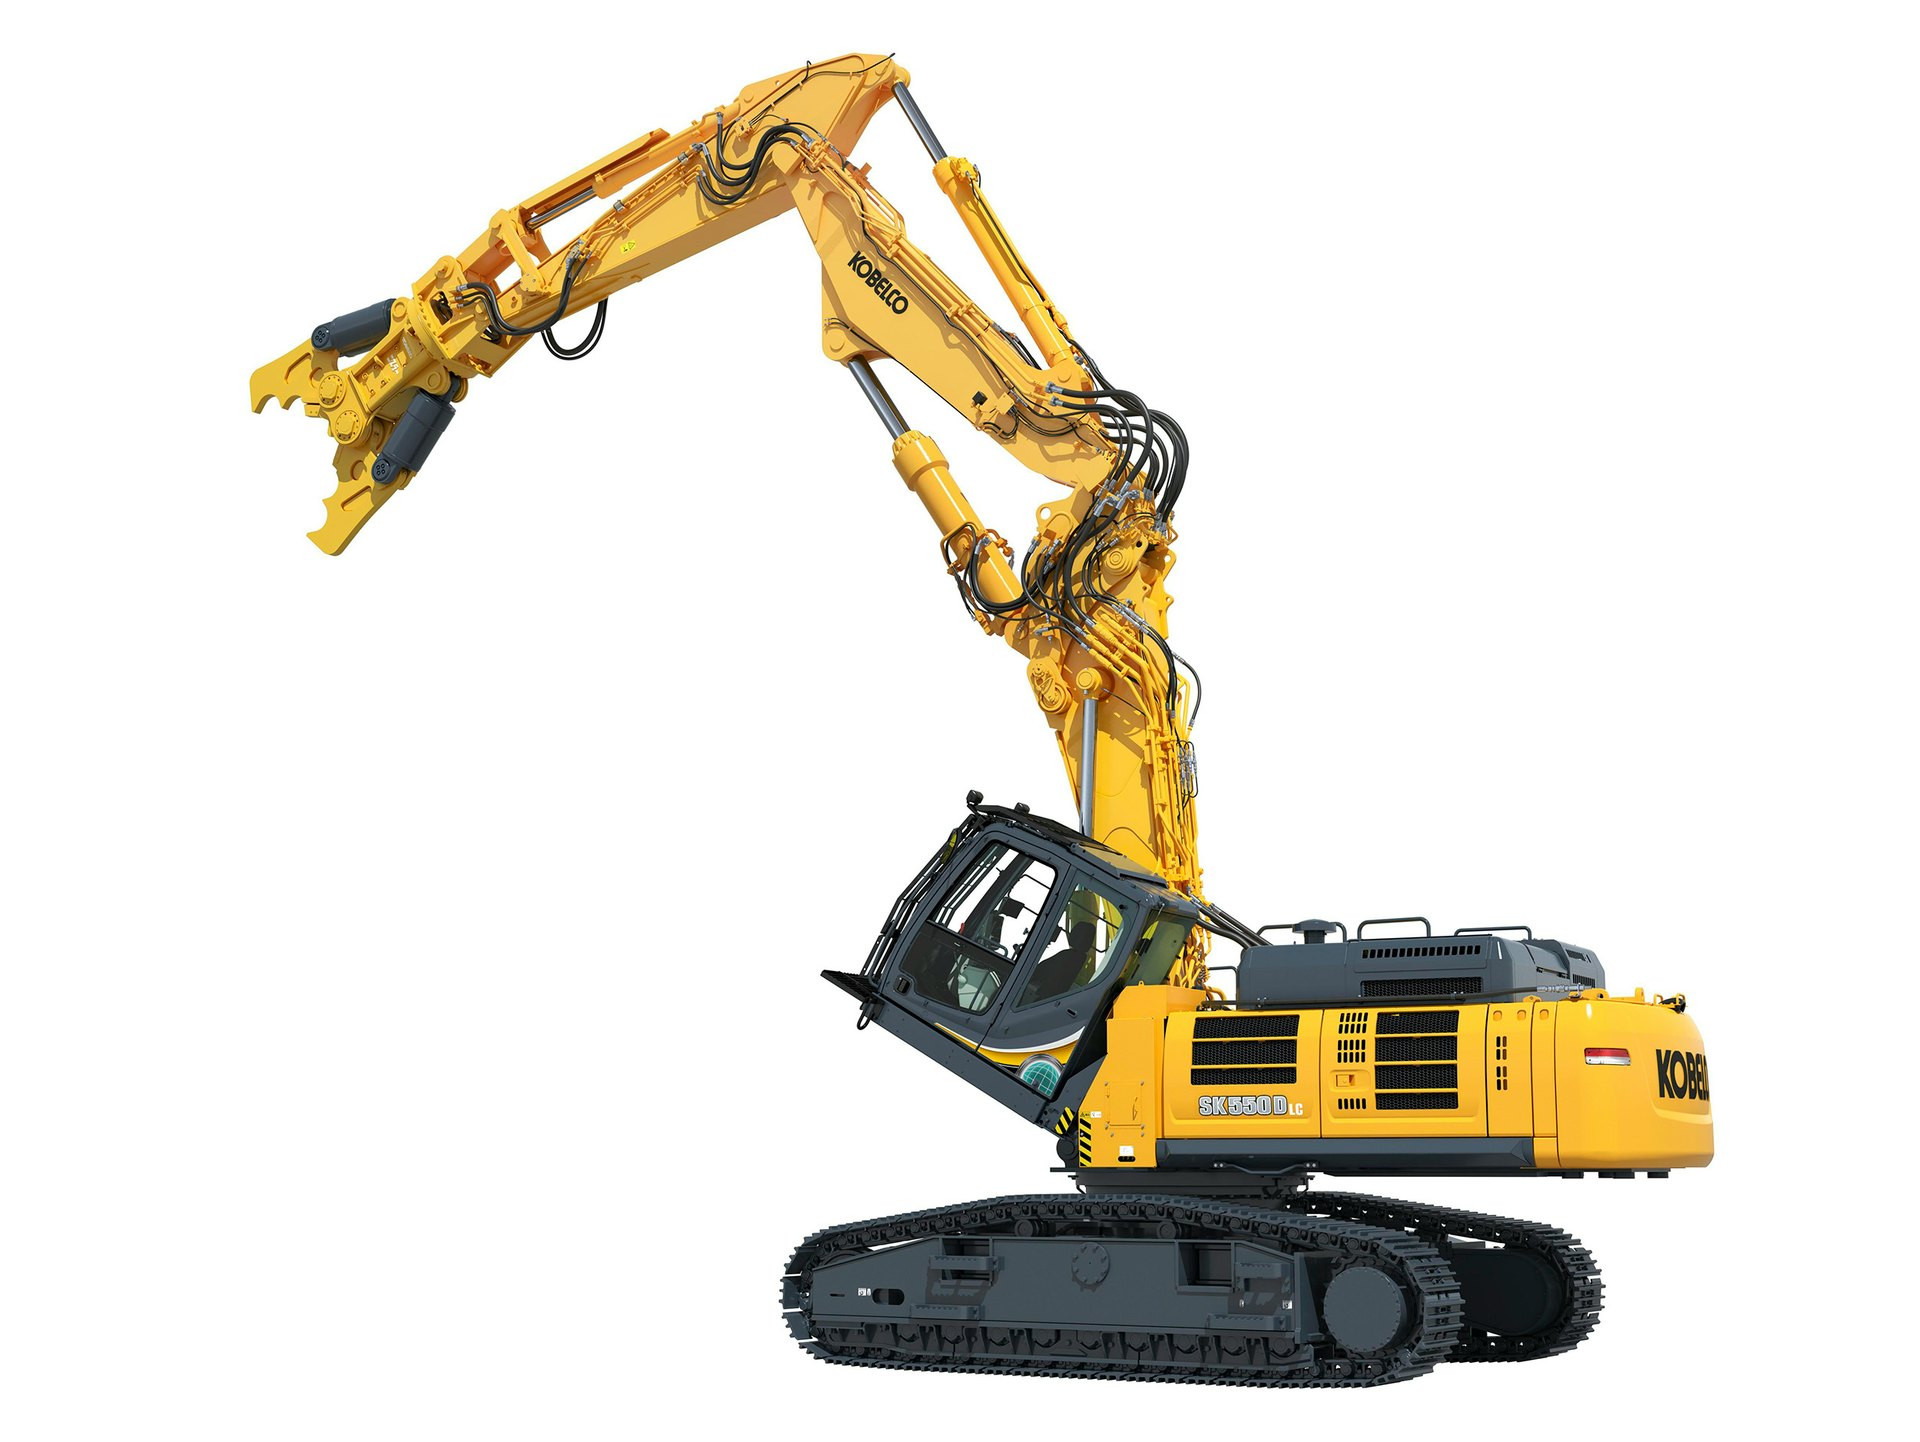 New KOBELCO SK400D and SK550D Excavators Aid Demolition of 